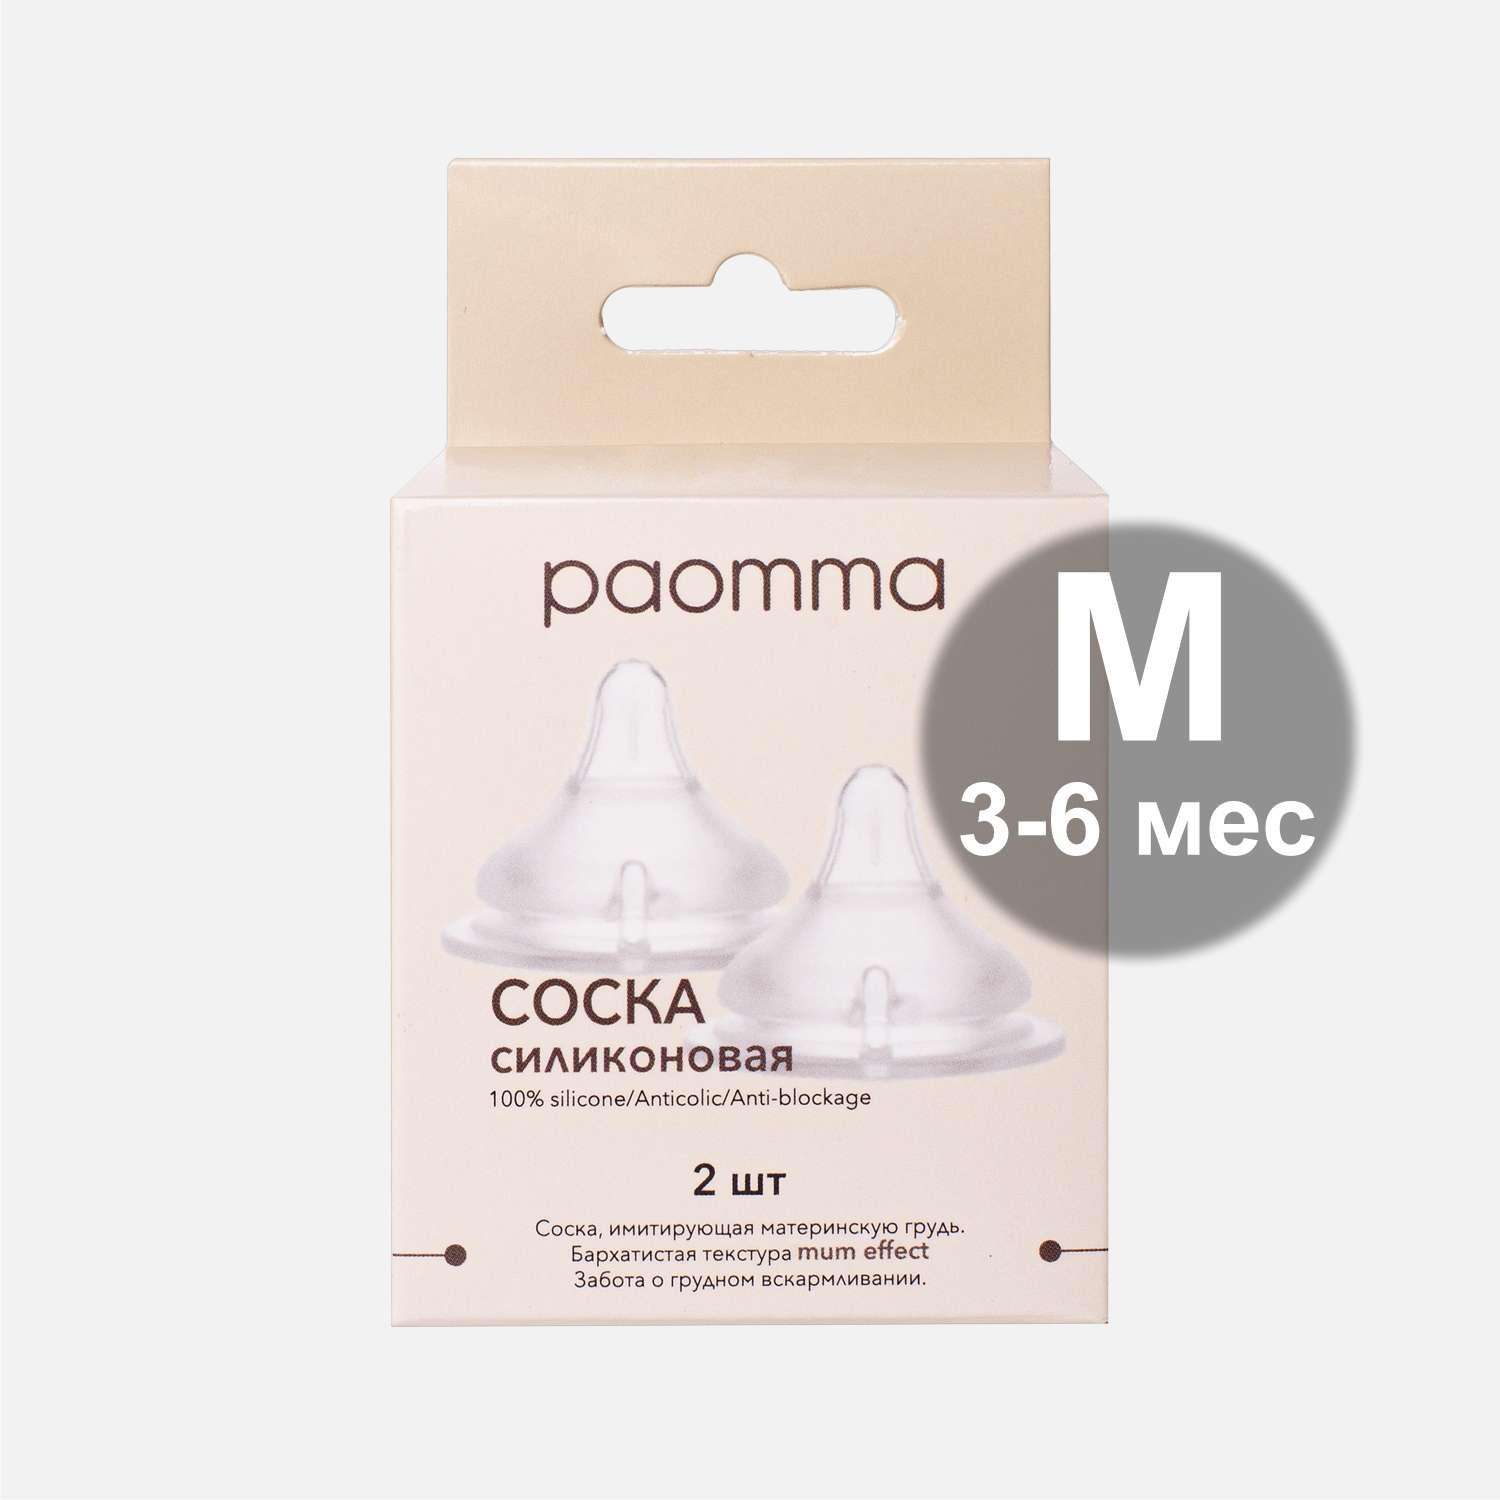 Соска на бутылочку paomma из силикона mum effect Anti-Colic M 3-6 мес 2 шт - фото 5